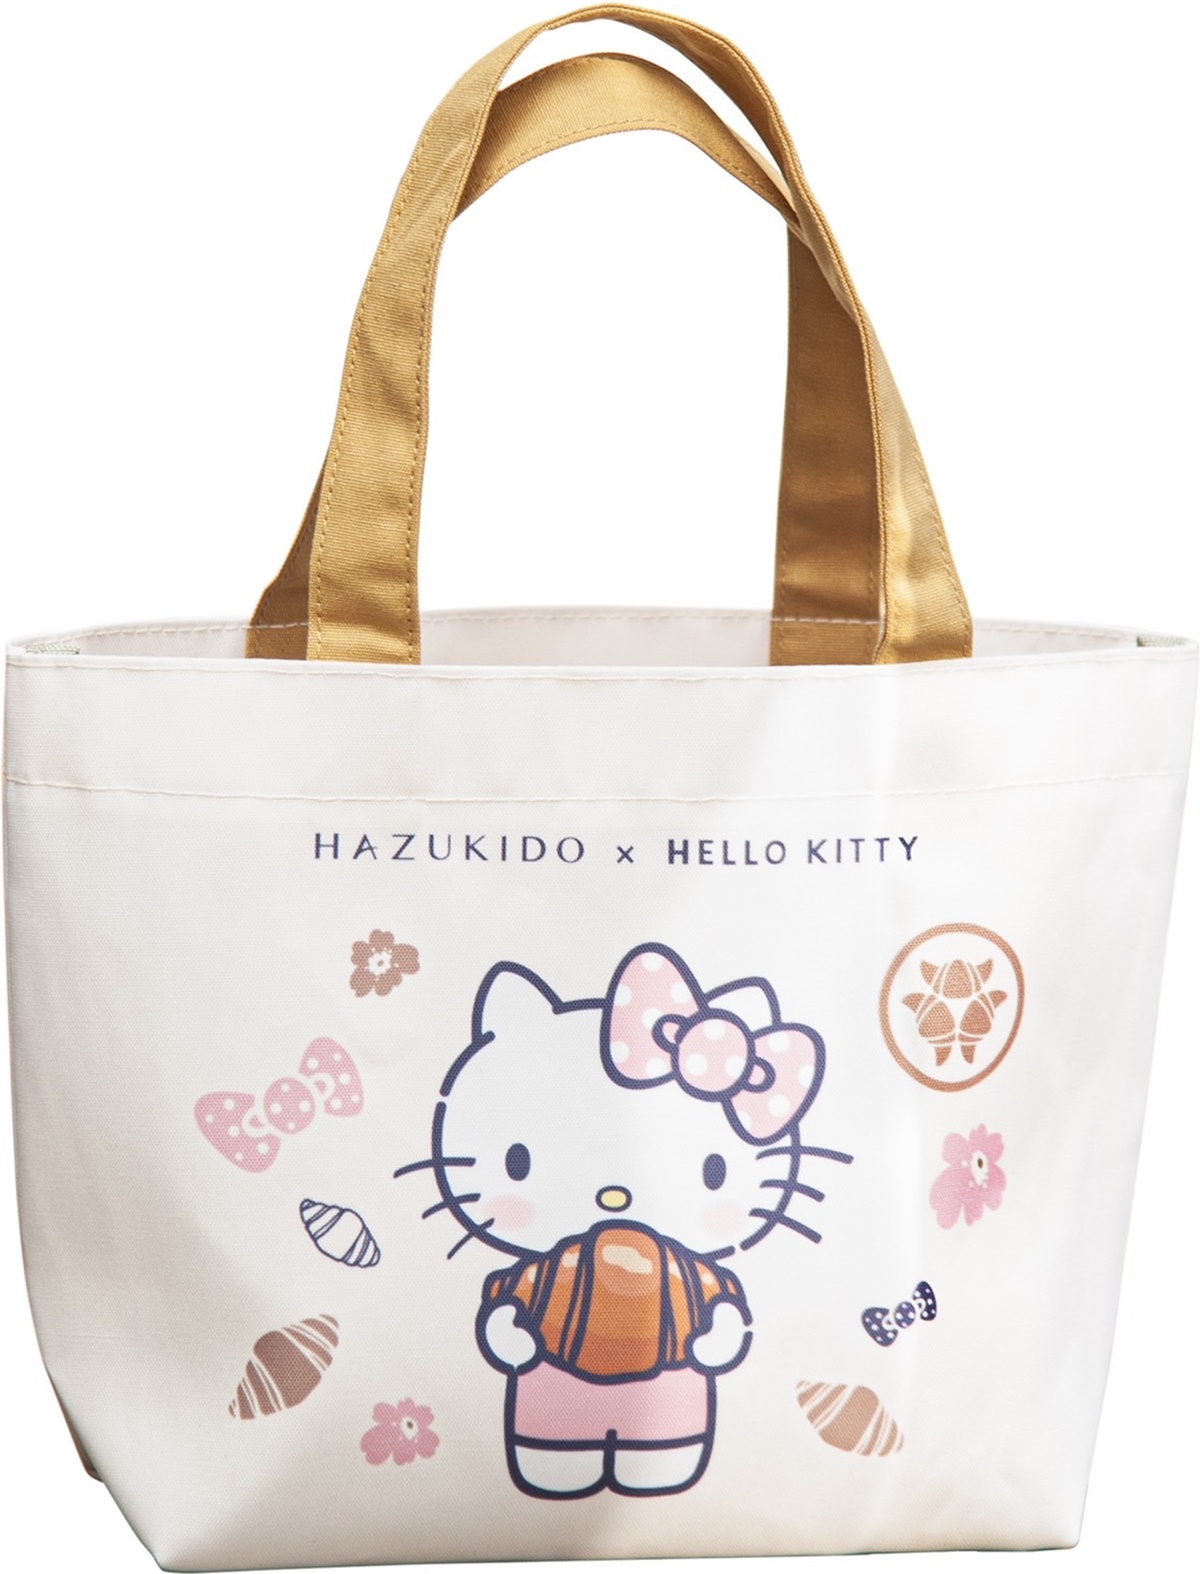 Hello Kitty粉必收！八月堂最萌聯名「酷冰杯、手提袋」，買６入再送Kitty包裝